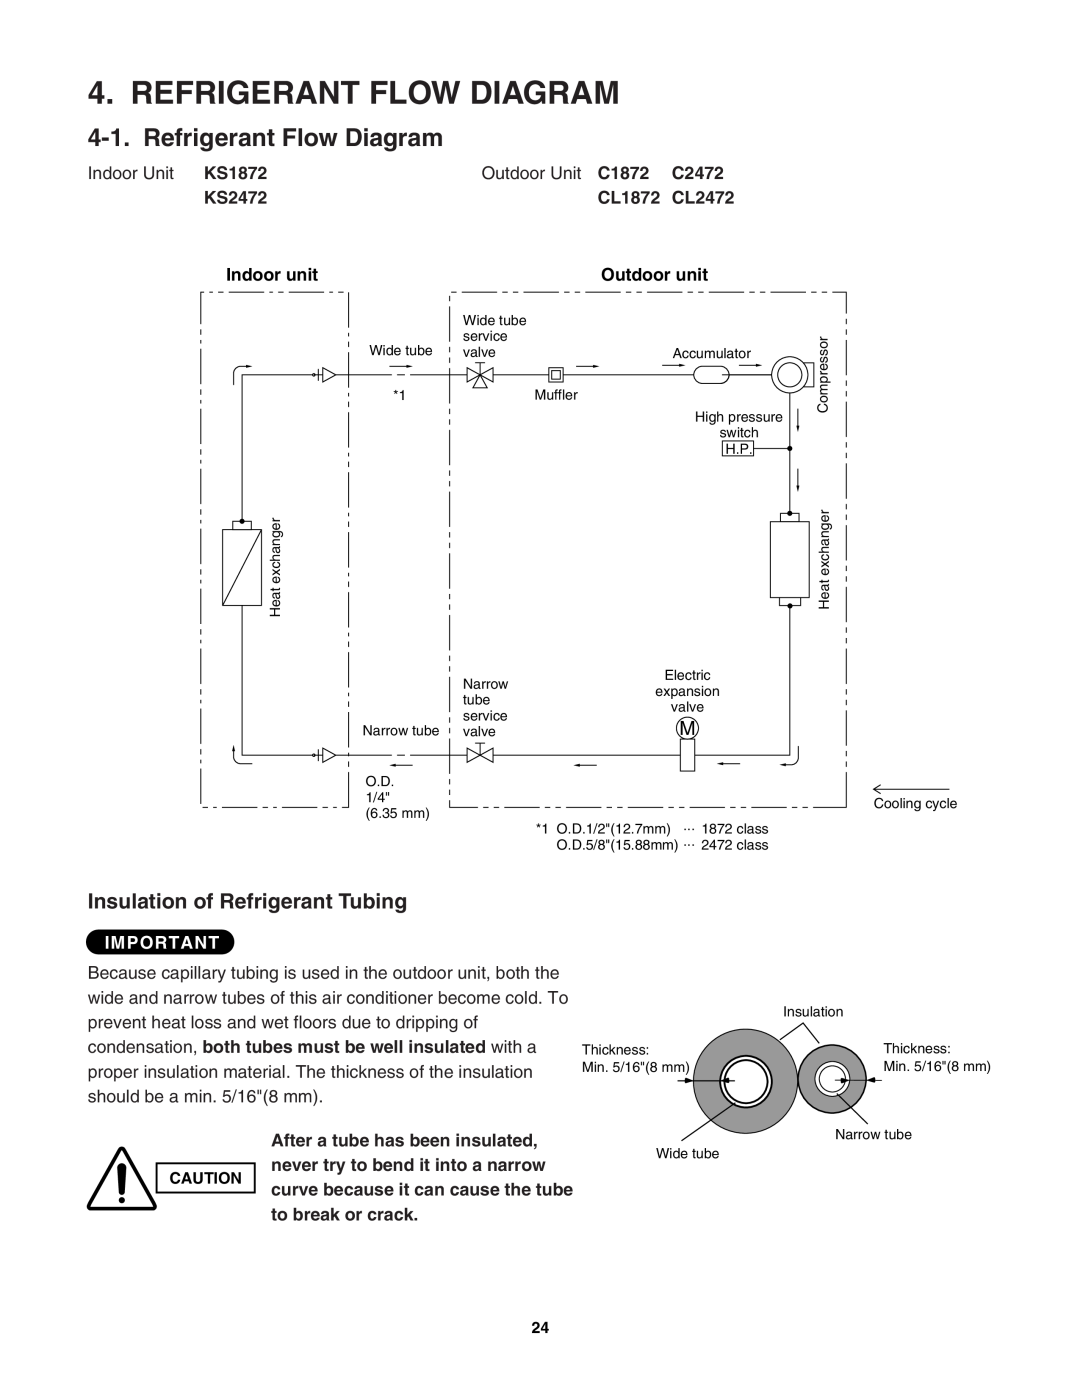 Sanyo C2472 Refrigerant Flow Diagram, Insulation of Refrigerant Tubing, Indoor Unit KS1872, Outdoor Unit C1872, KS2472 